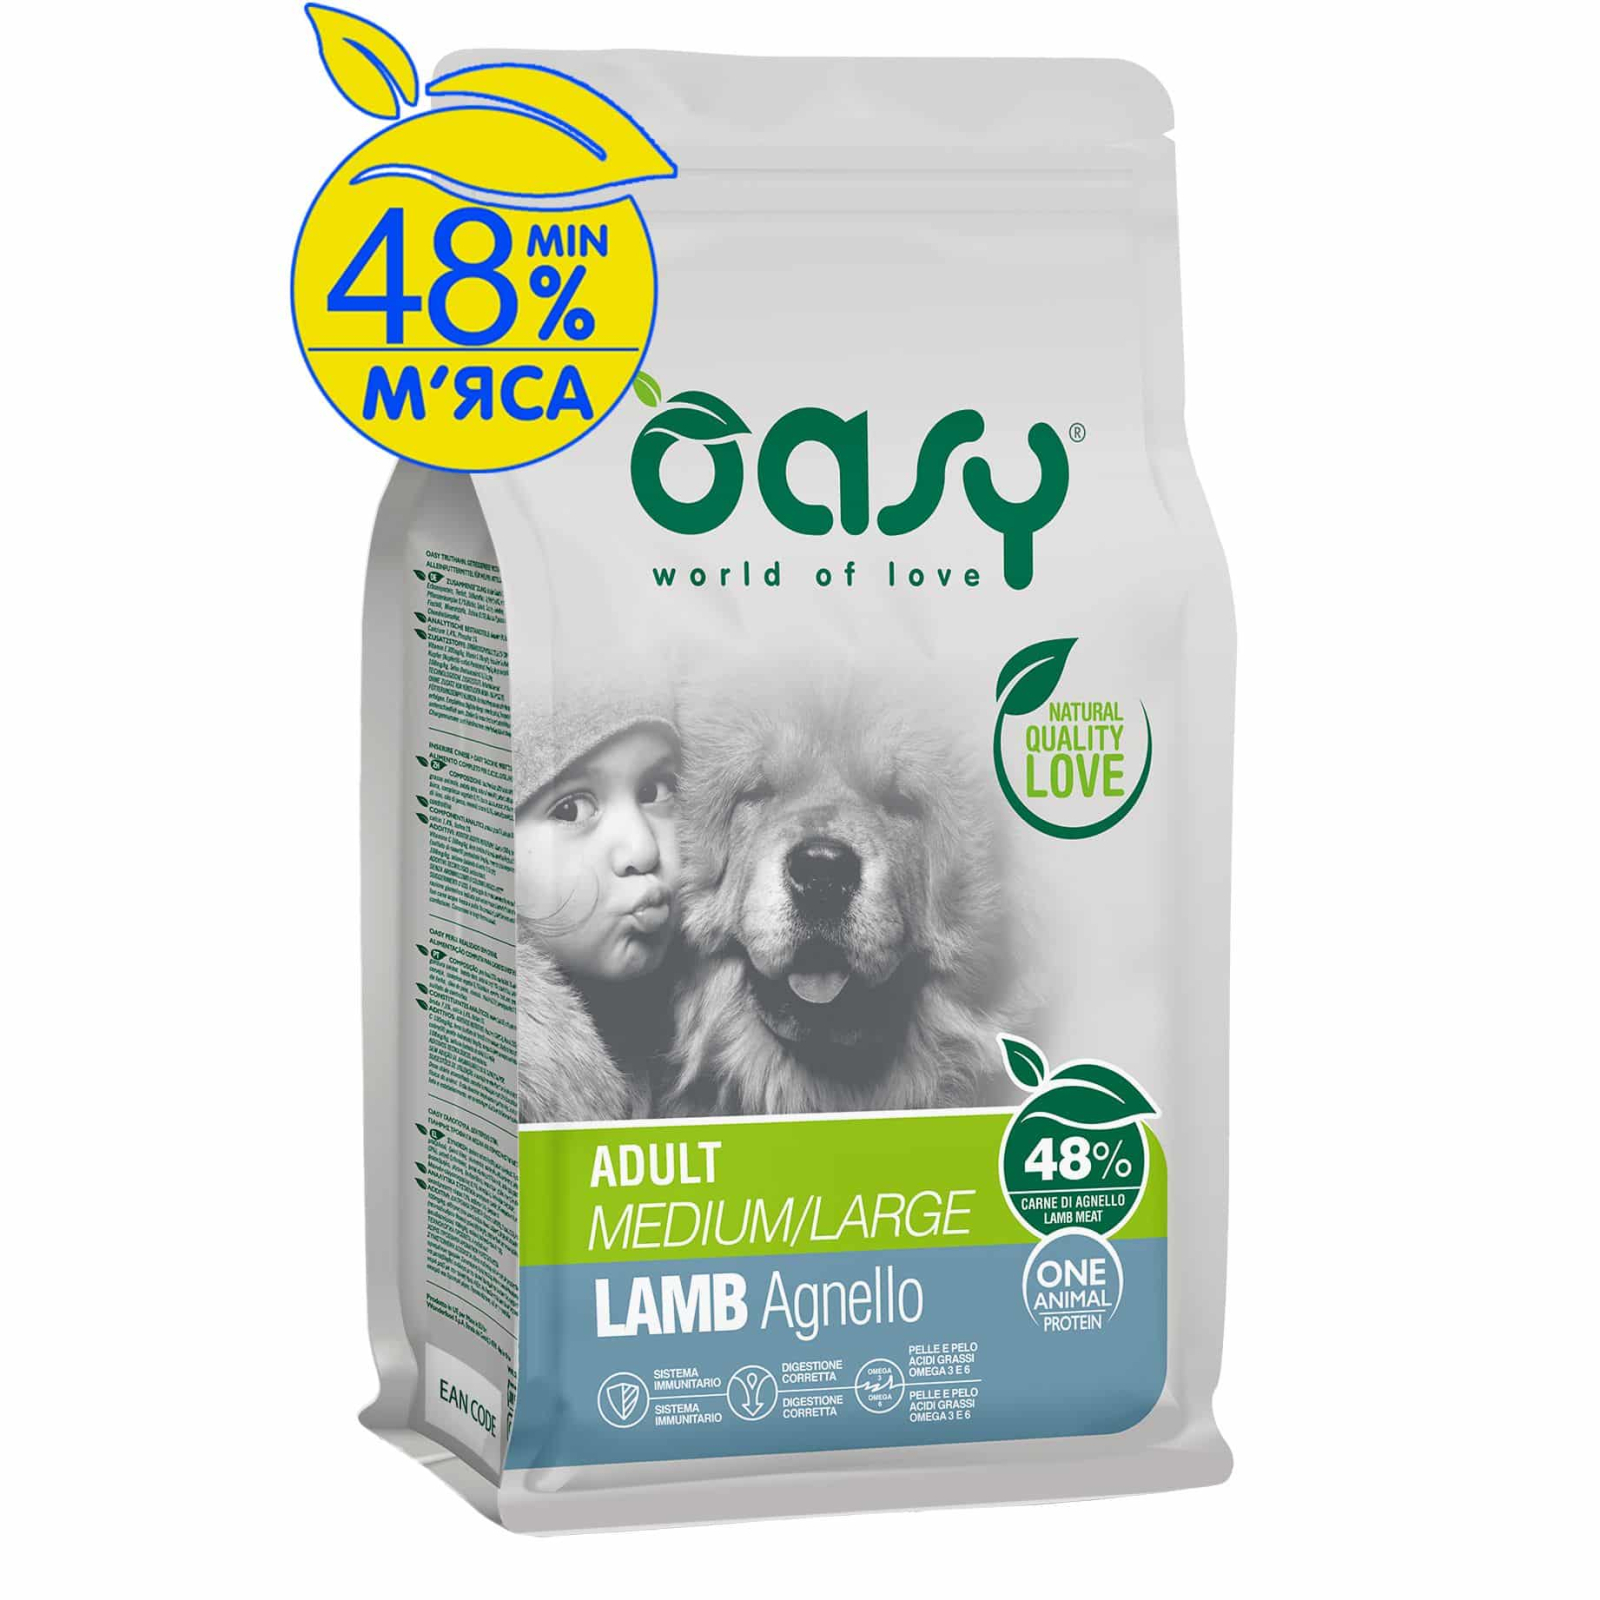 Сухой корм для собак OASY One Animal Protein ADULT Medium/Large с ягненком 18 кг (8053017349329)